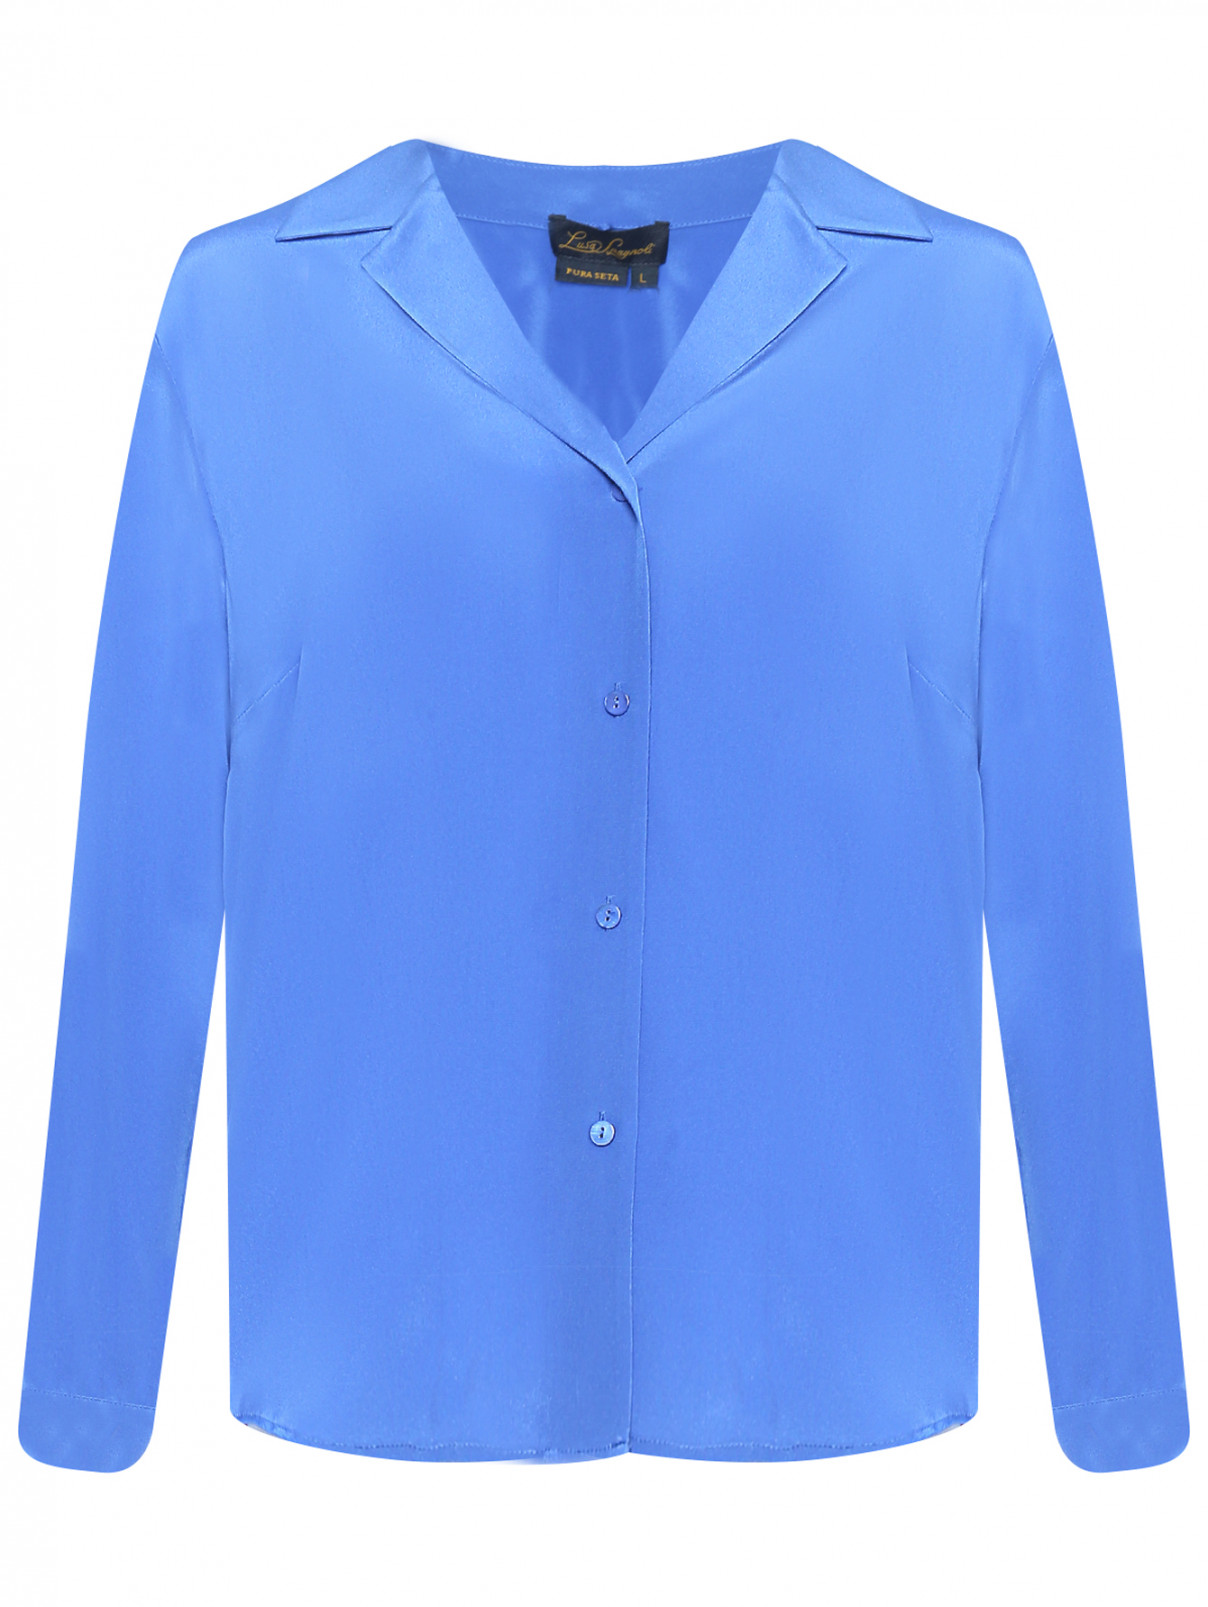 Блуза из шелка на пуговицах Luisa Spagnoli  –  Общий вид  – Цвет:  Синий